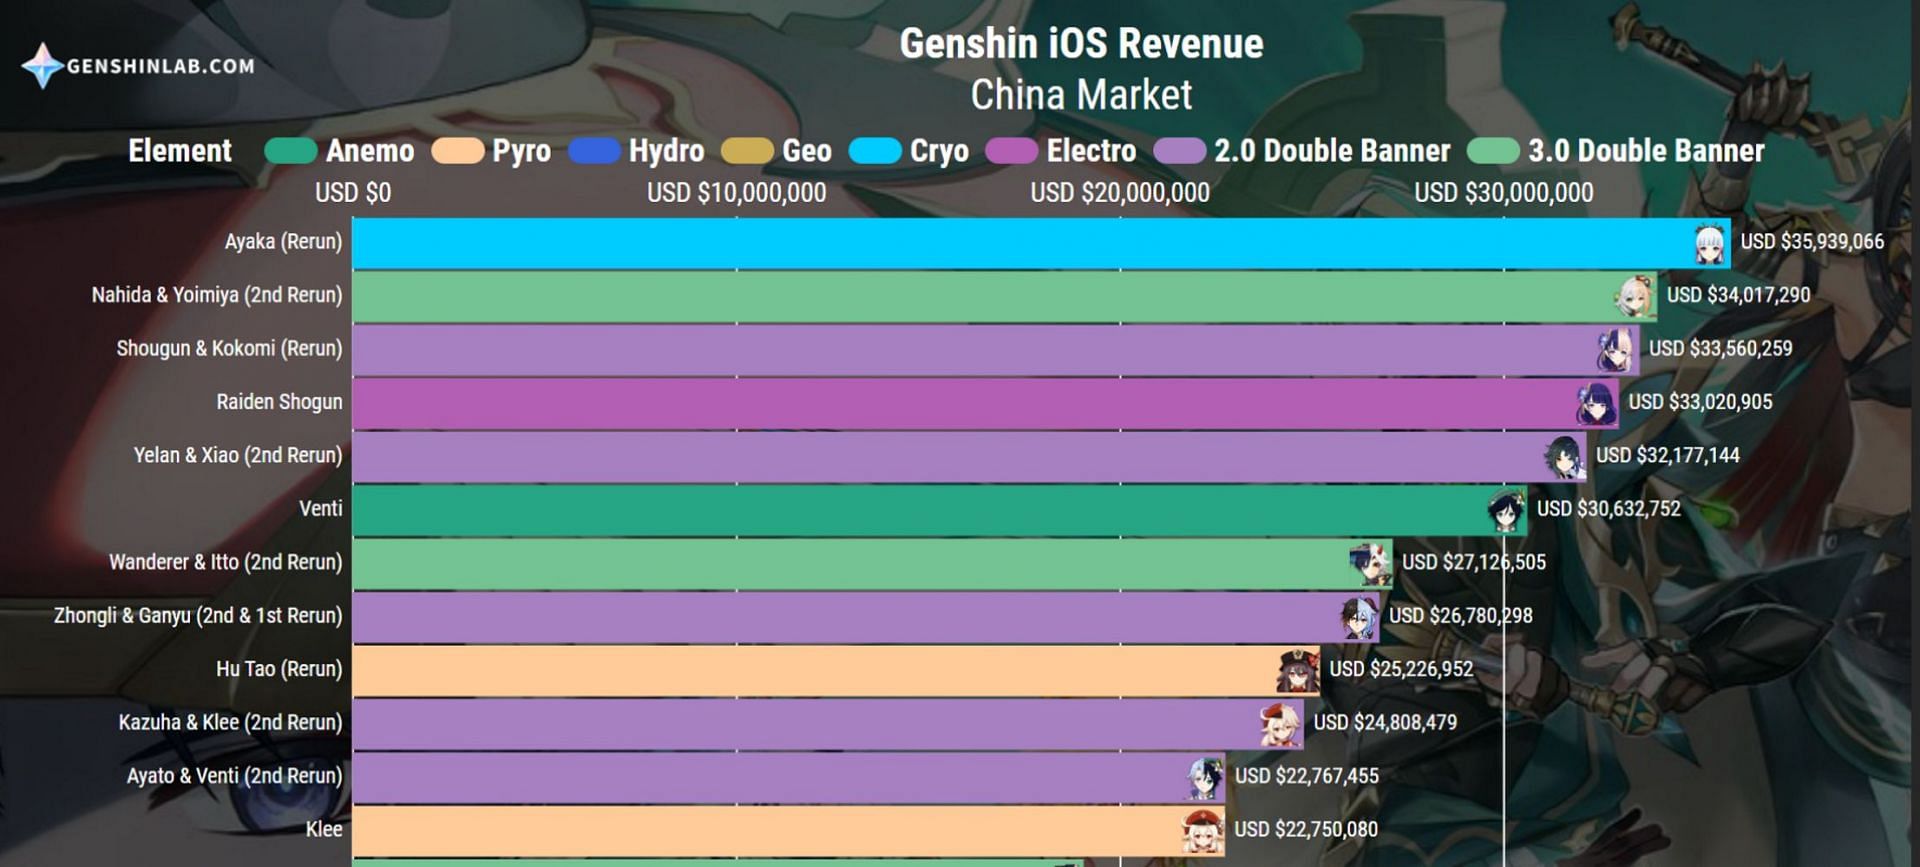 Genshin Impact Scaramouche banner revenue, popularity, and rankings